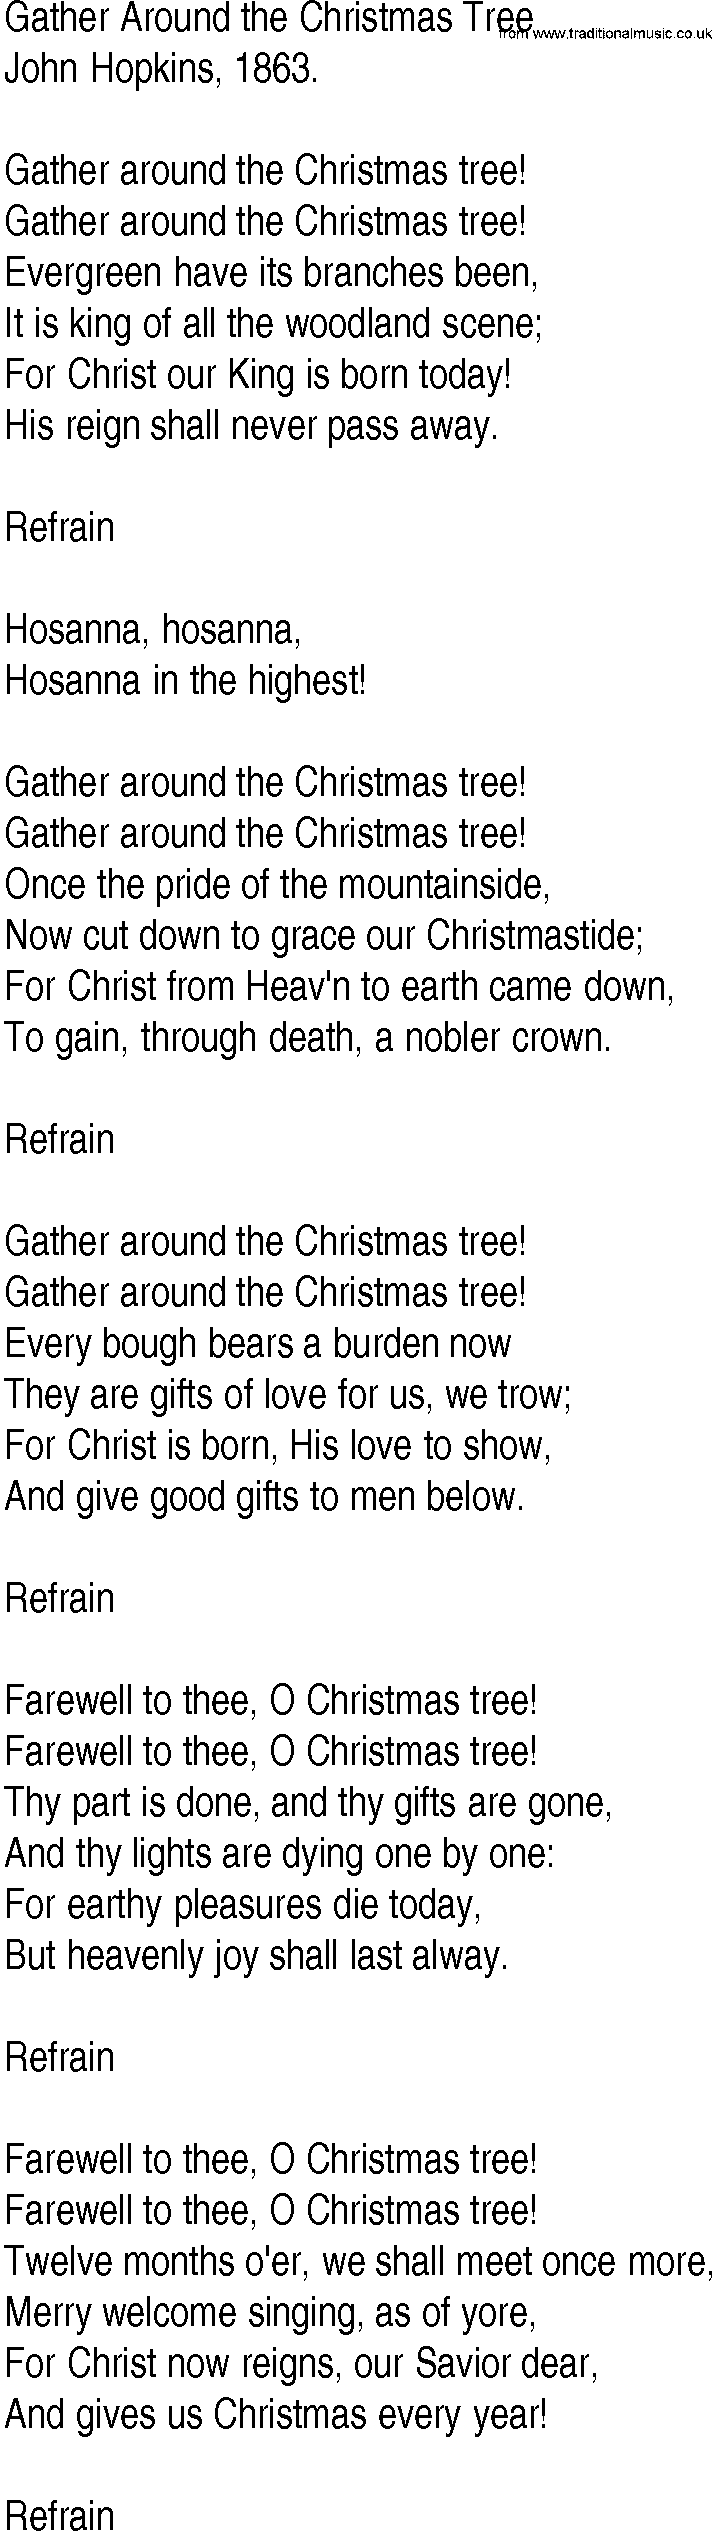 Hymn and Gospel Song: Gather Around the Christmas Tree by John Hopkins lyrics